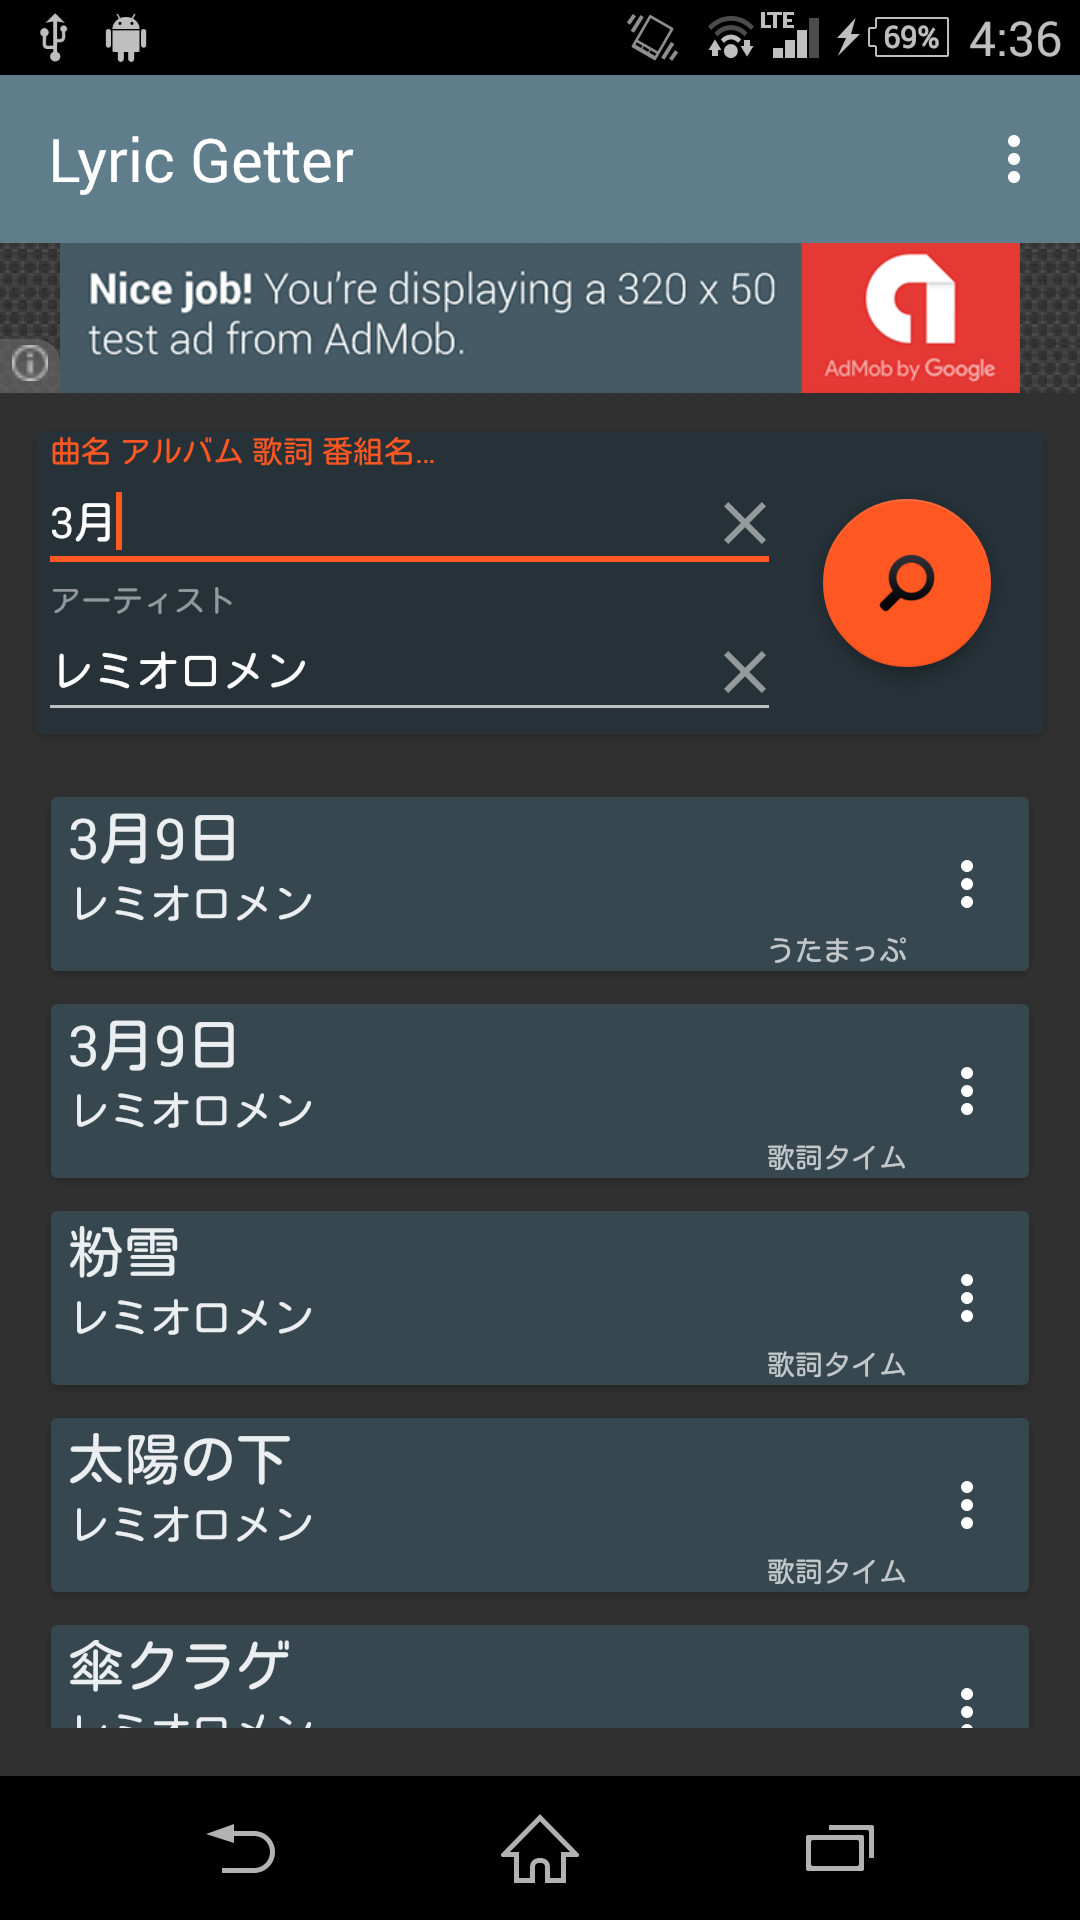 Android application LyricGetter 歌詞検索アプリ screenshort